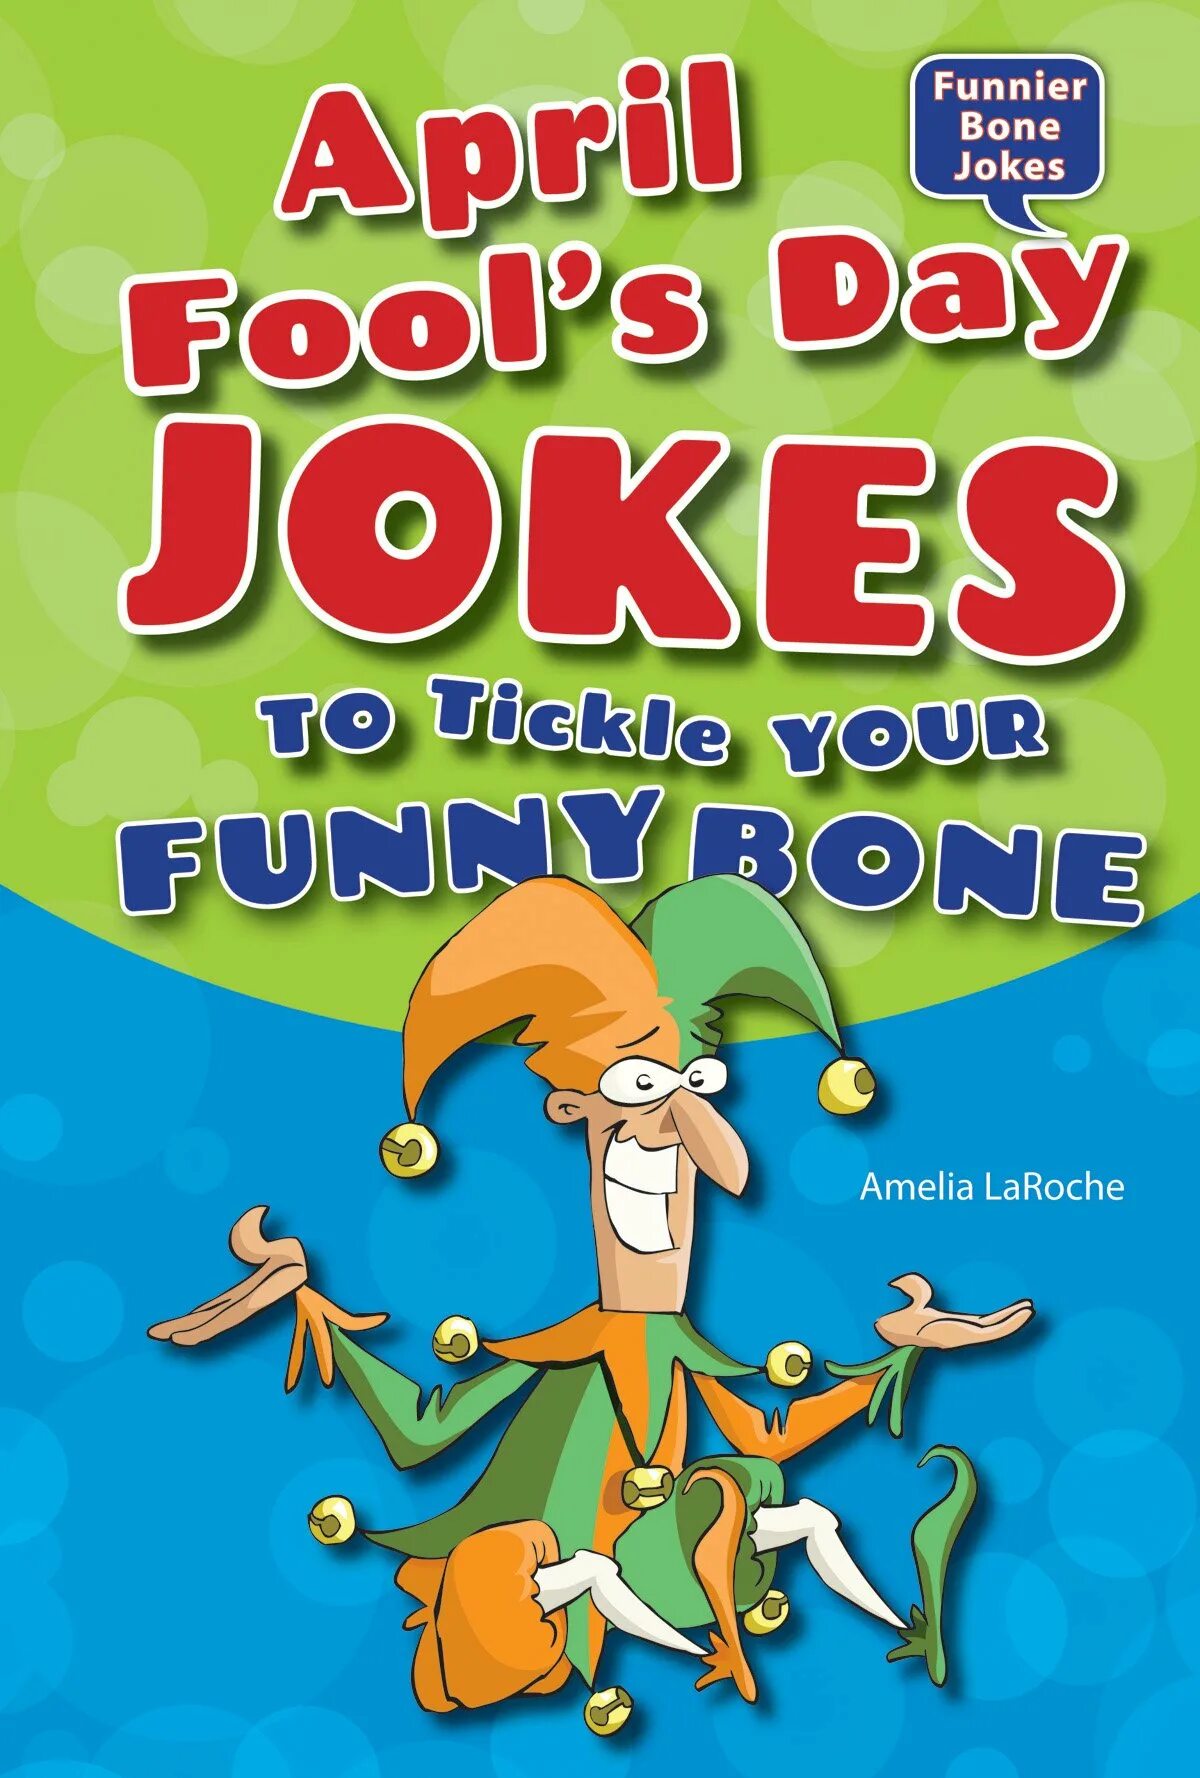 April Fool's Day jokes. Fools Day jokes. April Fool's Day tongue Twisters. April Fool's Day jokes in English. April jokes